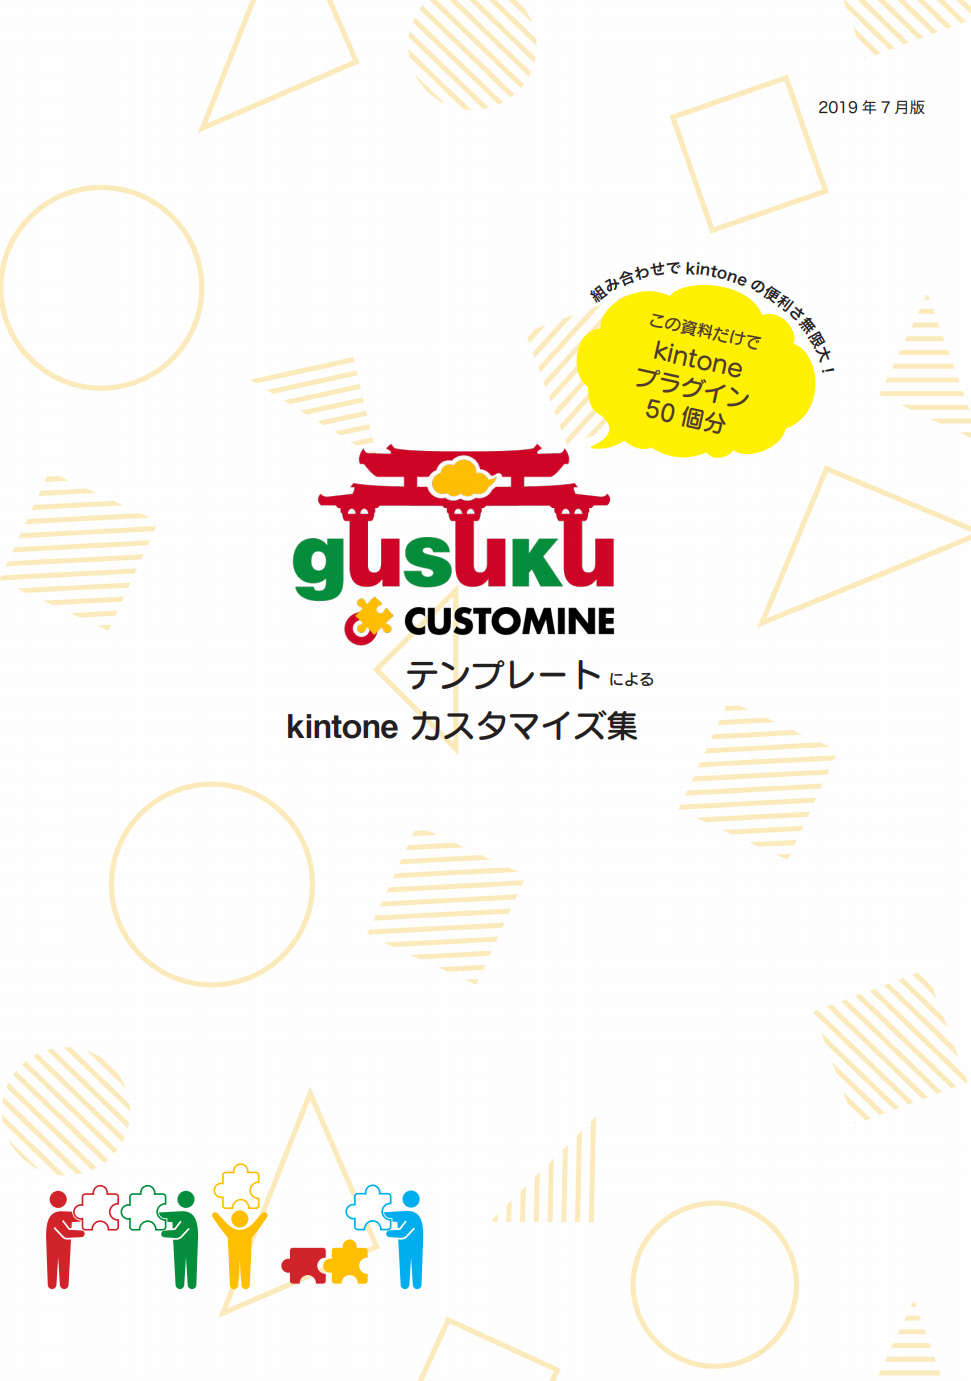 gusuku Customine テンプレートによるkintoneカスタマイズ集